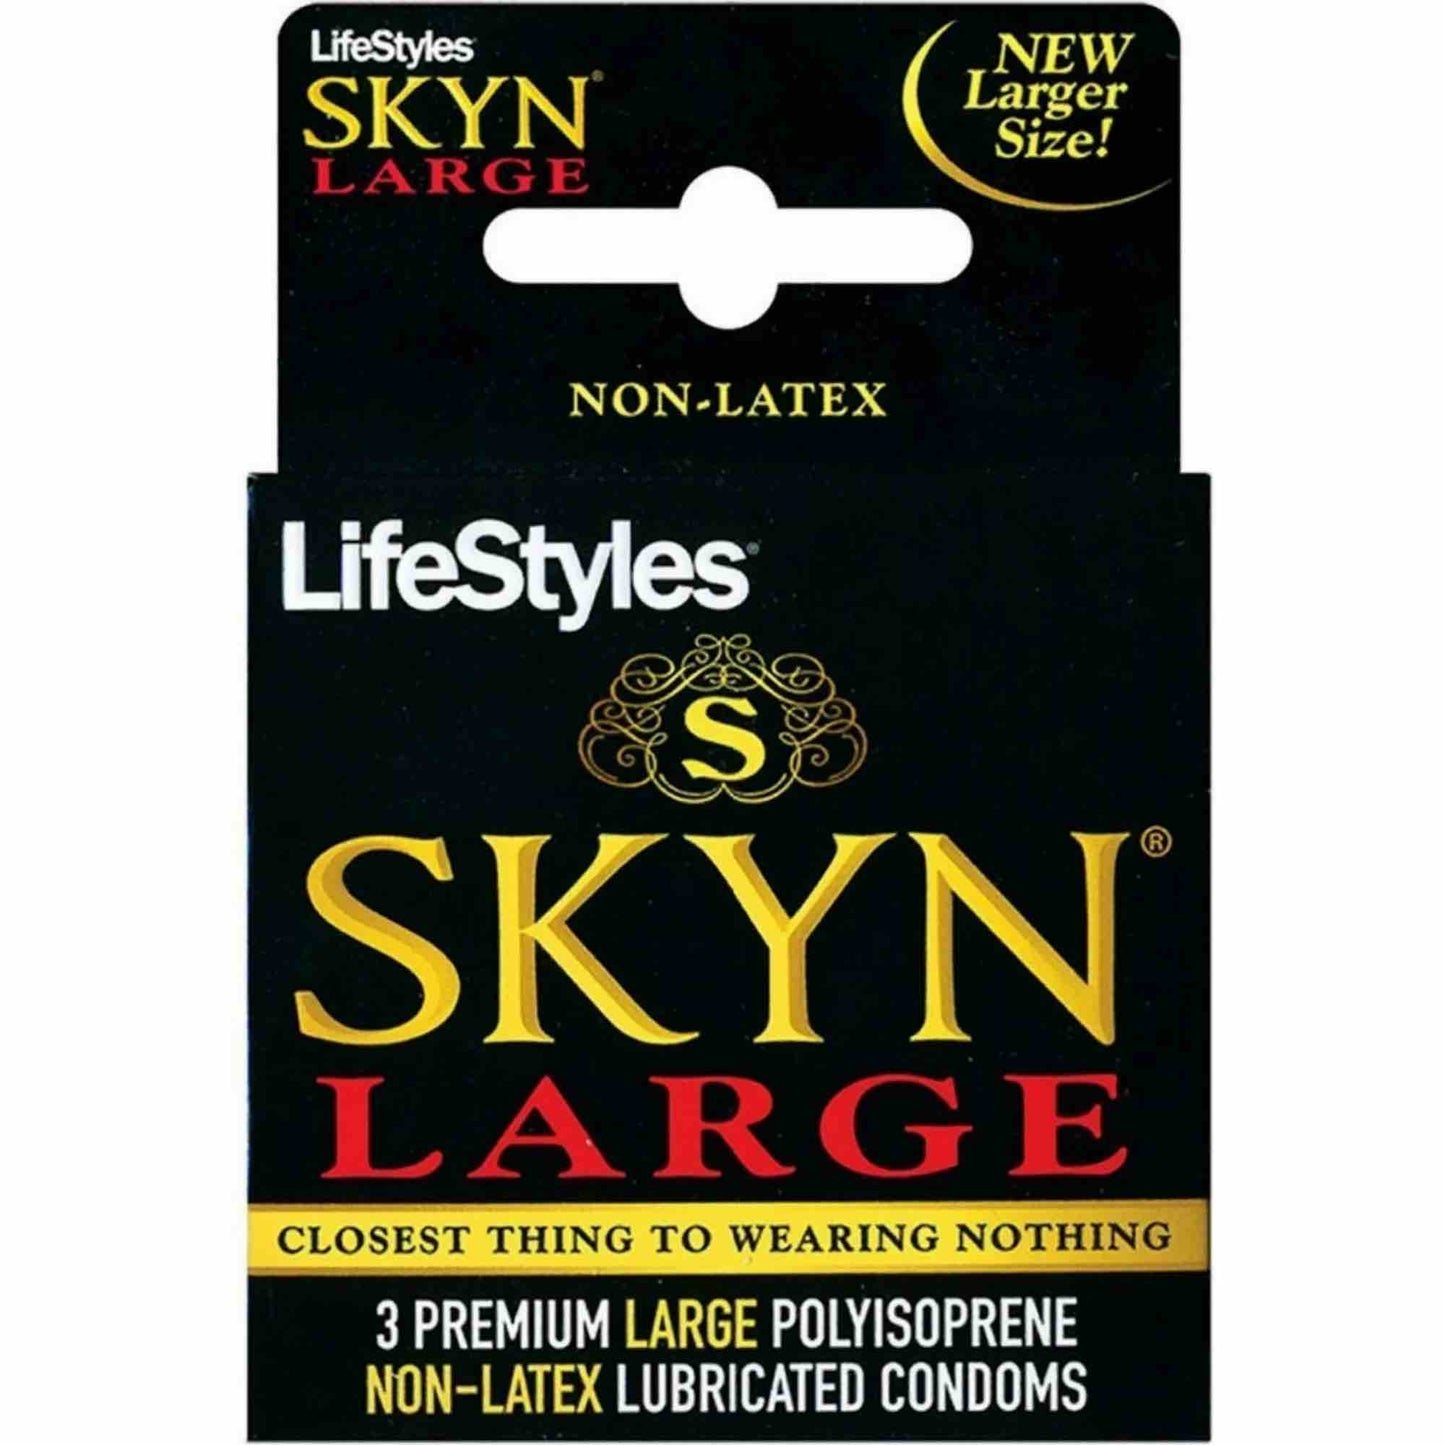 Lifestyles Skyn Condoms Large 3 pack.